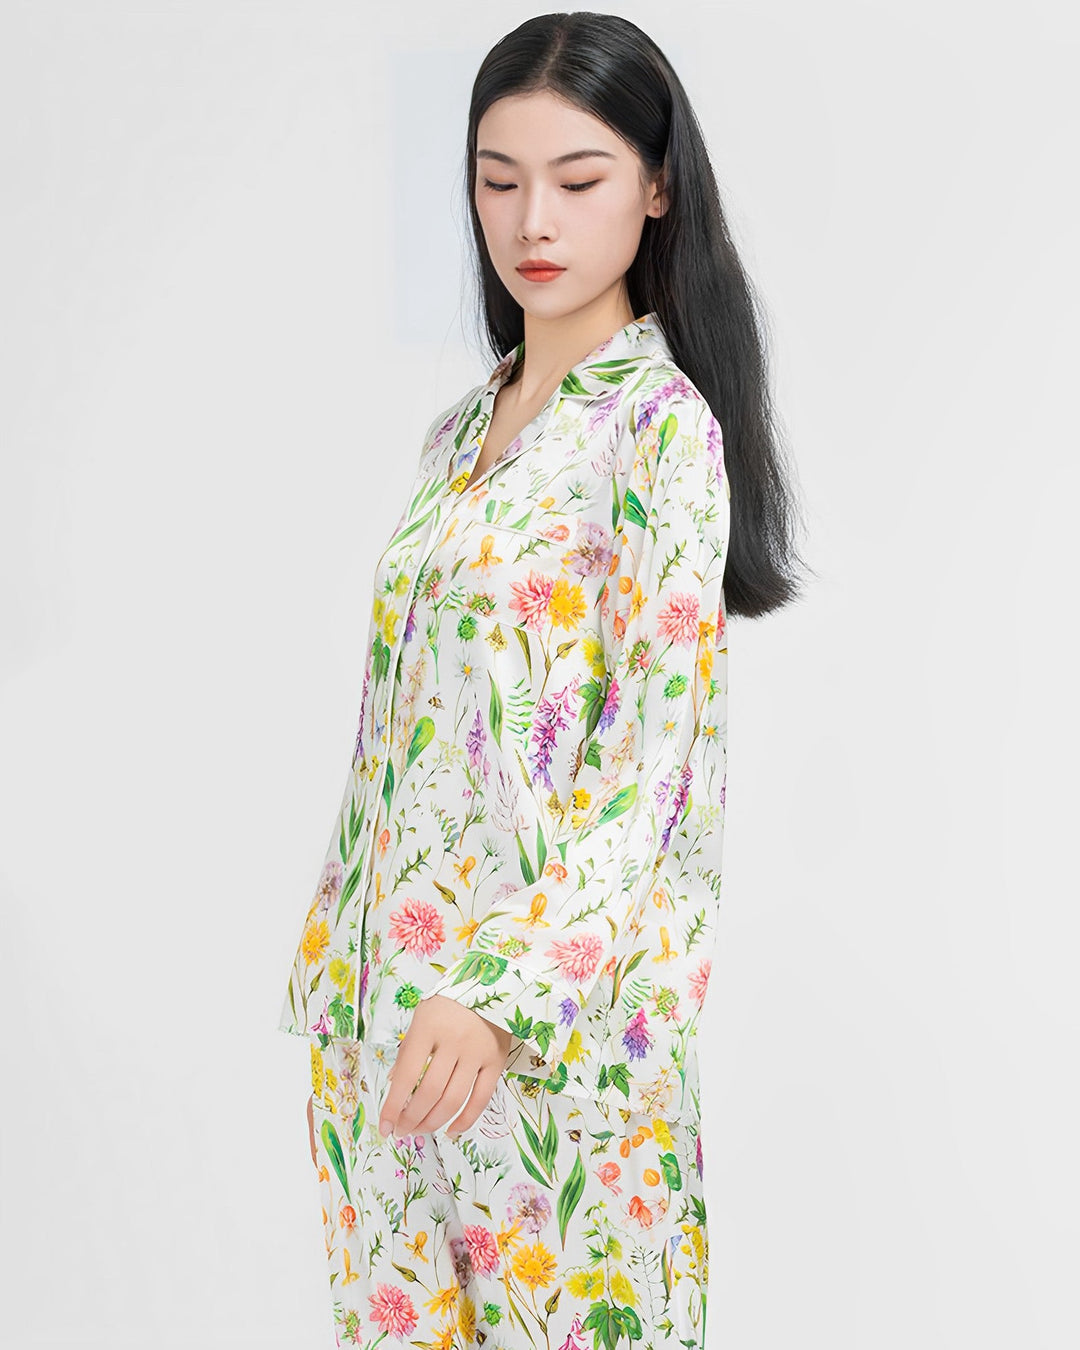 100% Silk Sleepwear for Women – Pajamas & Dresses – SusanSilk